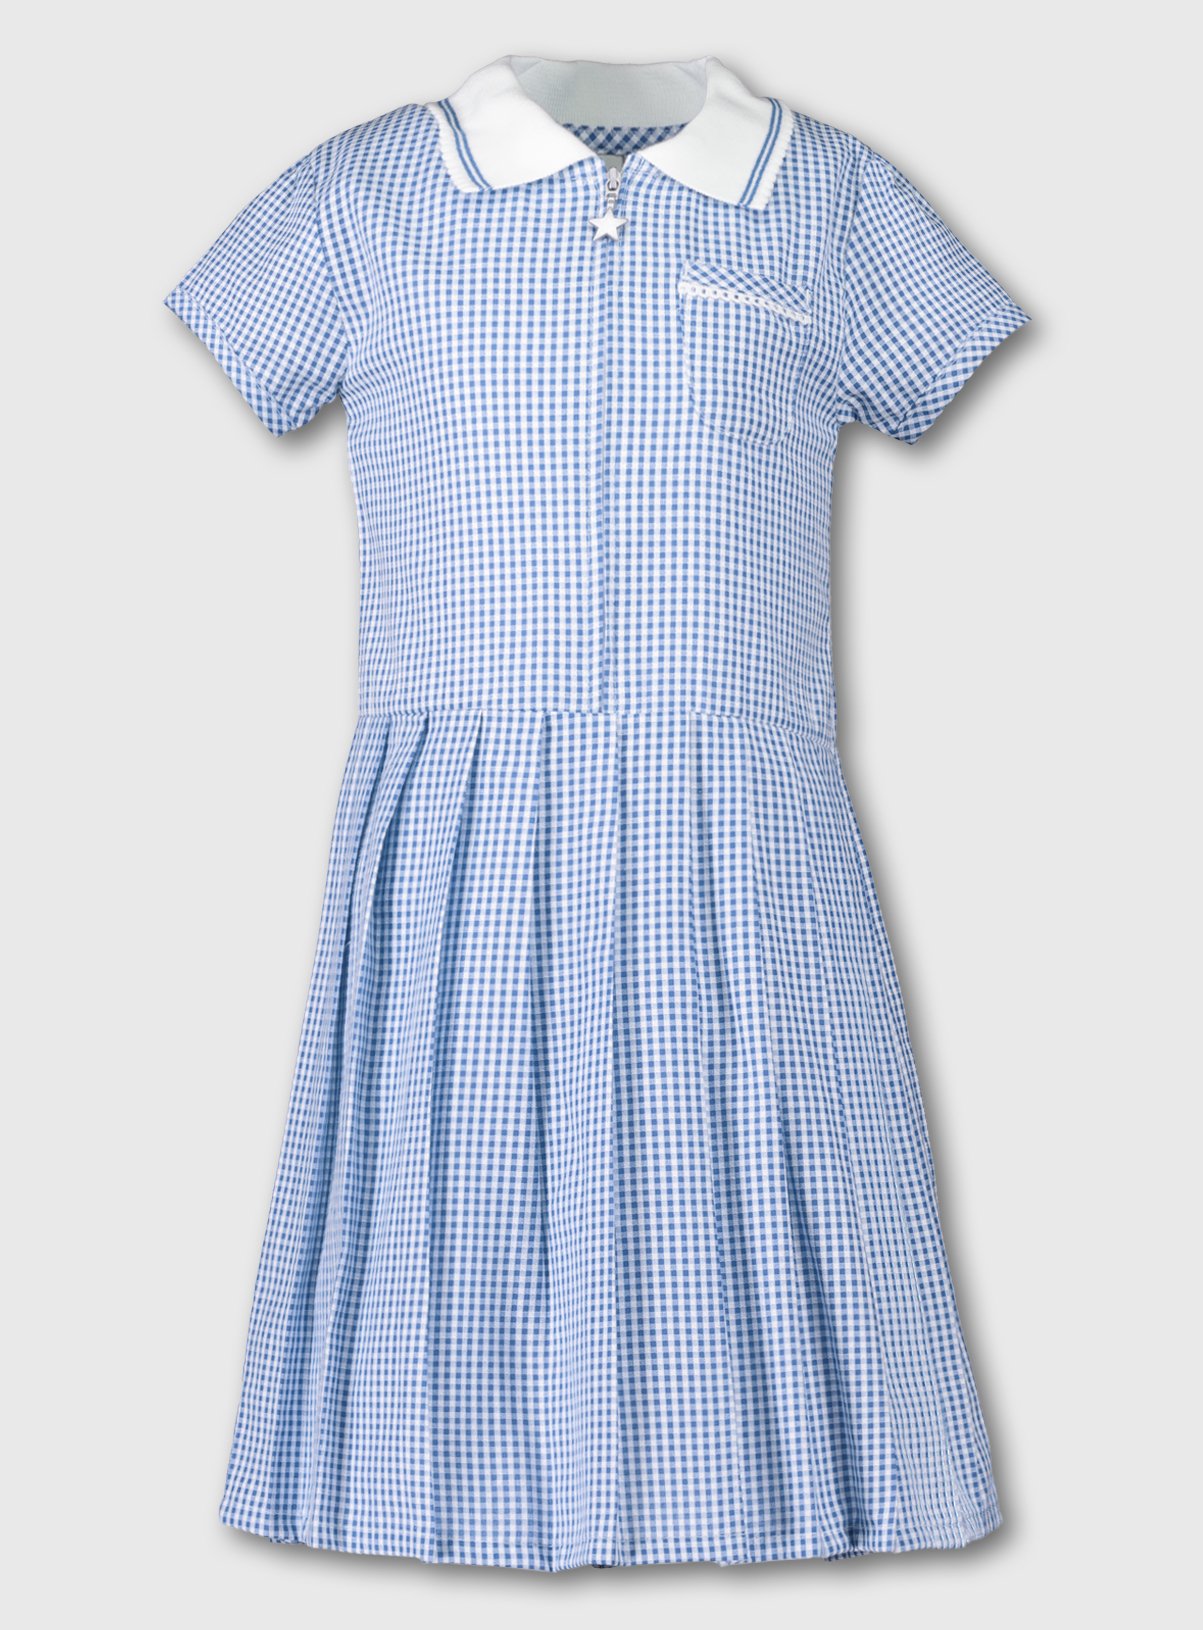 sainsburys gingham school dress